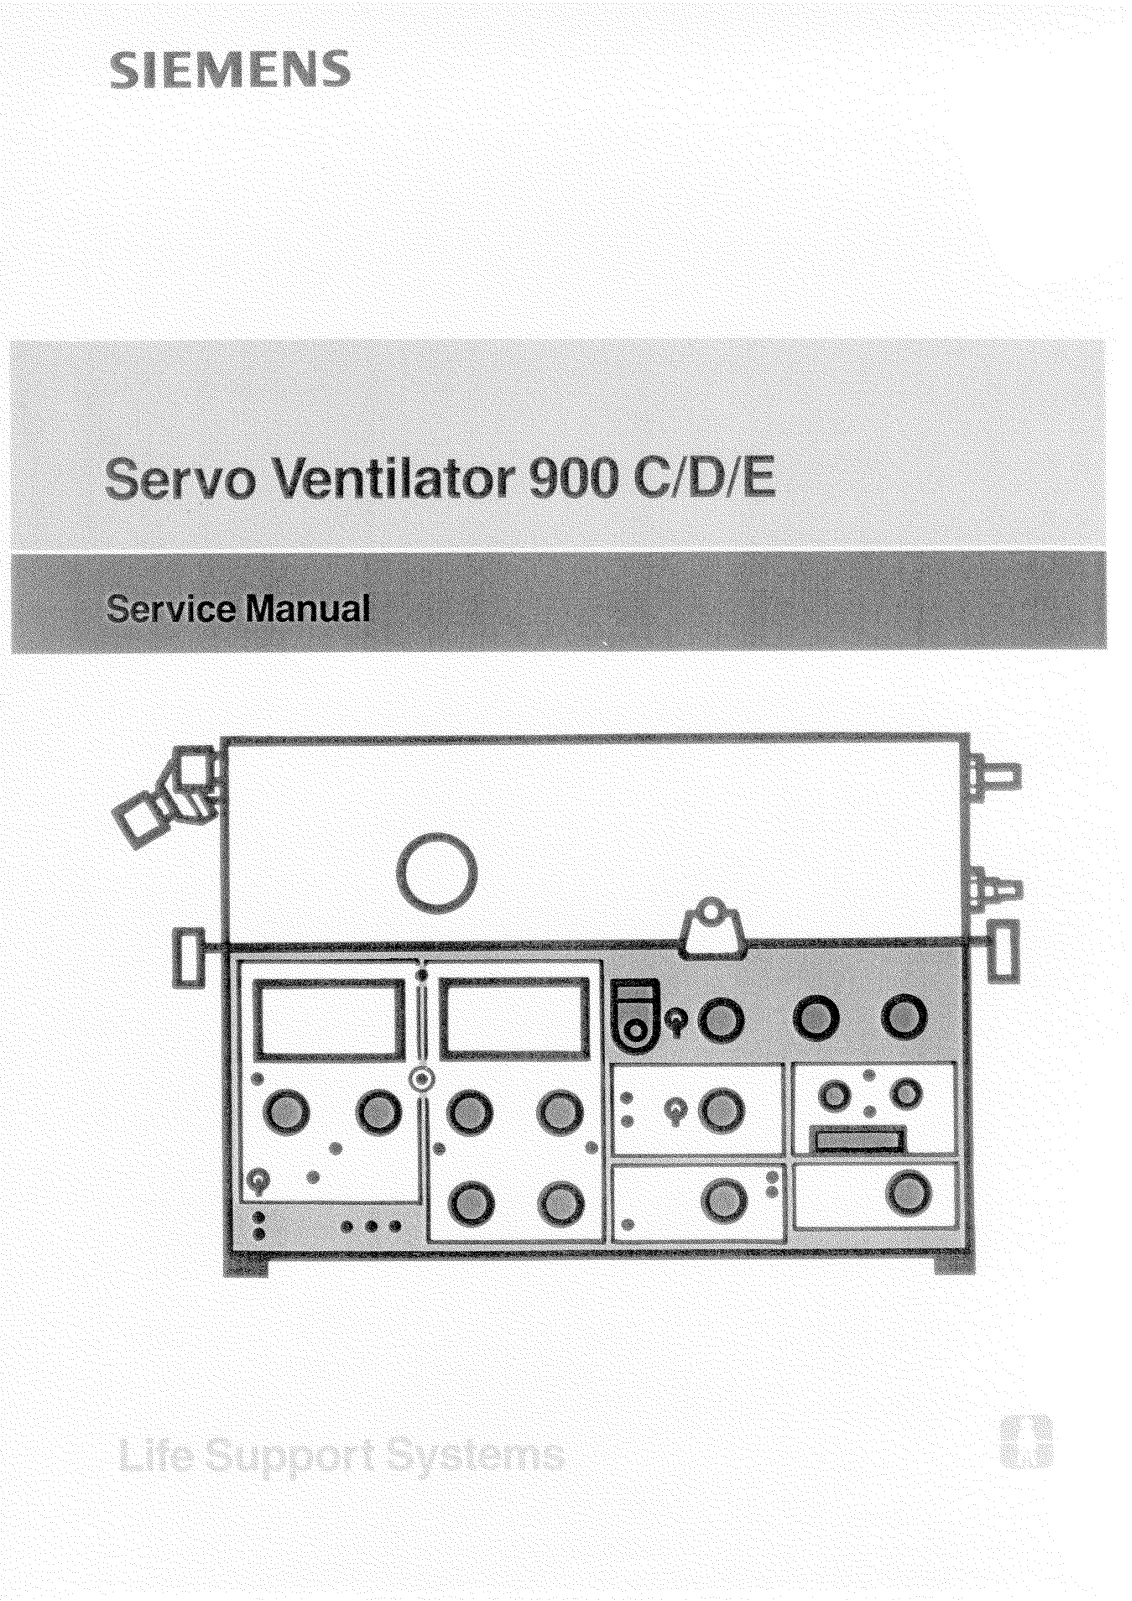 Siemens Servo-900 Service manual